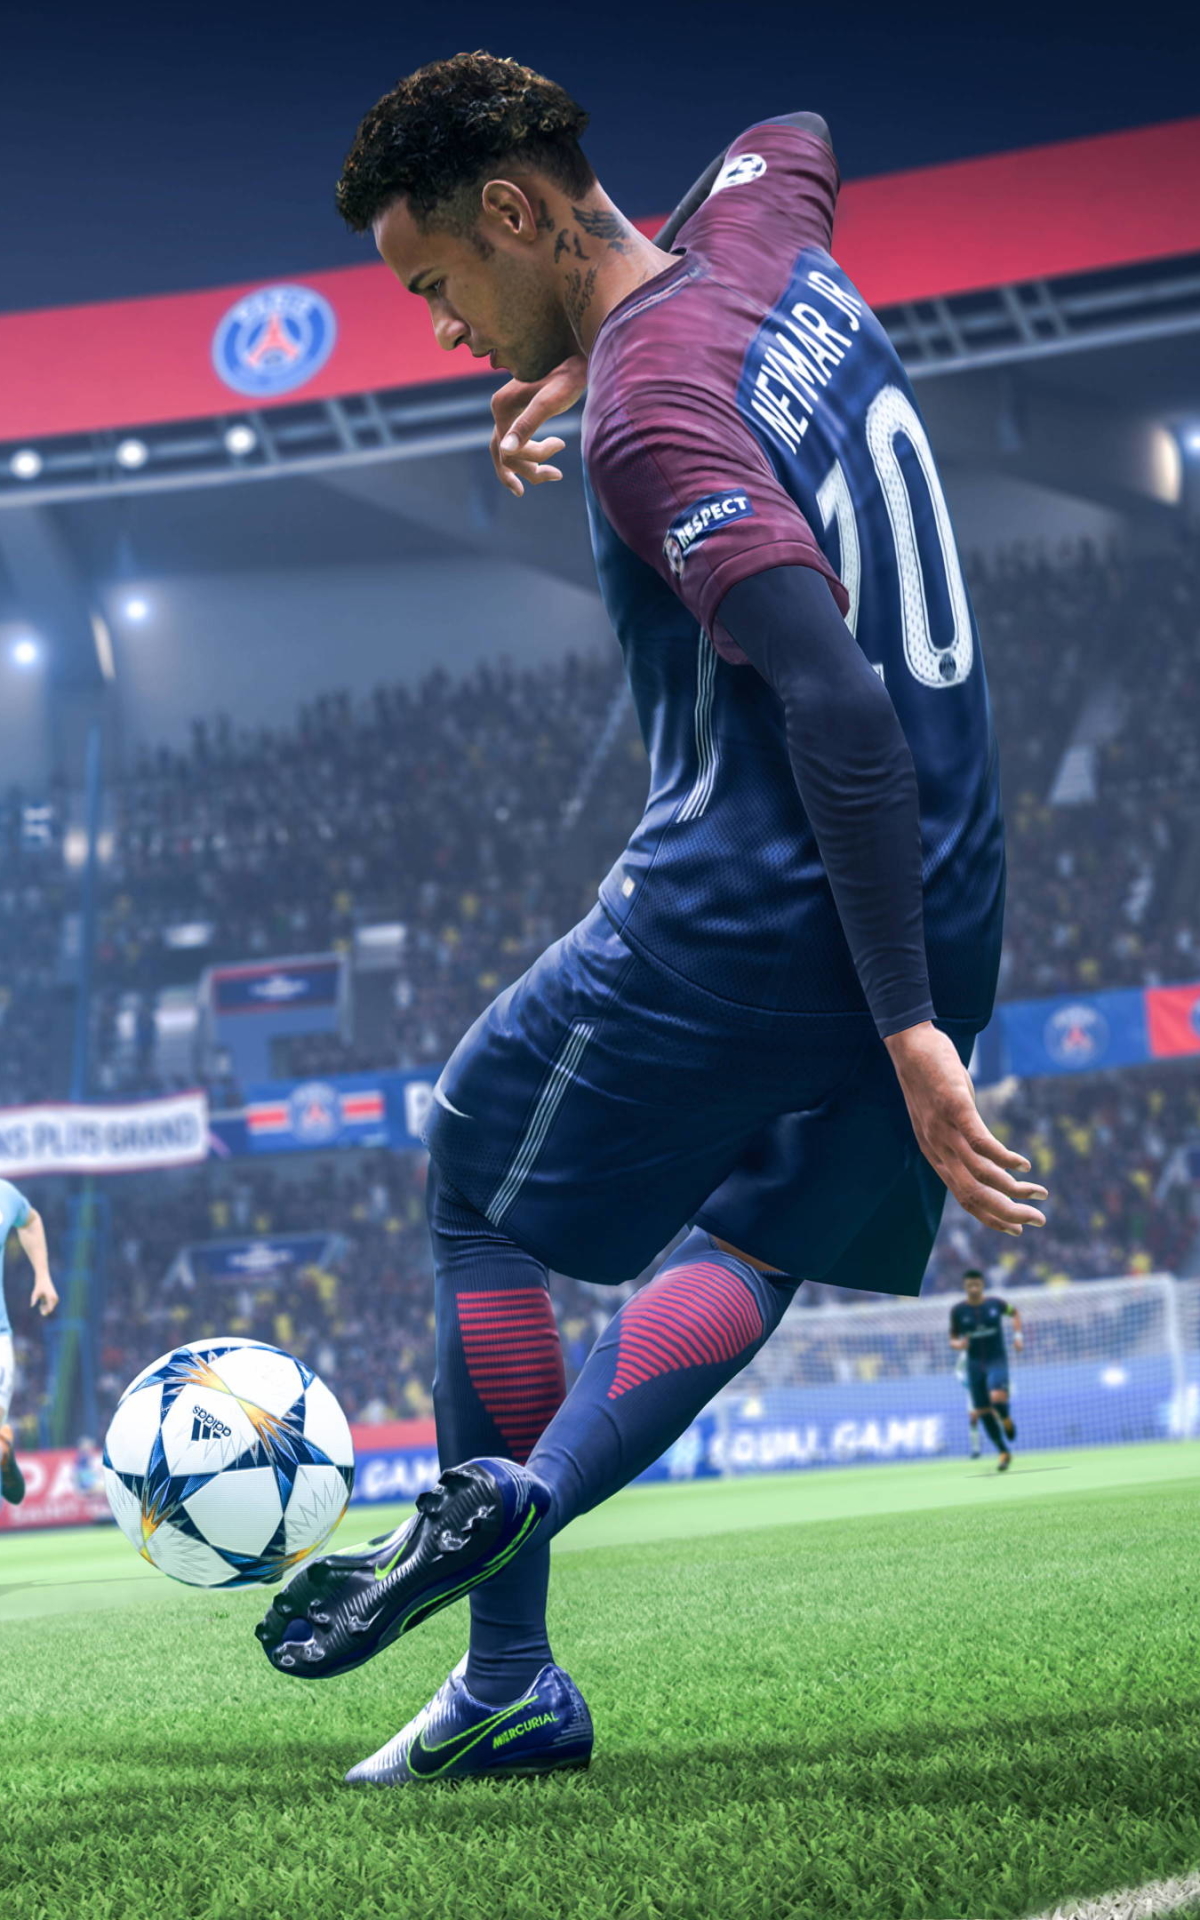 fifa 19, video game, neymar, soccer